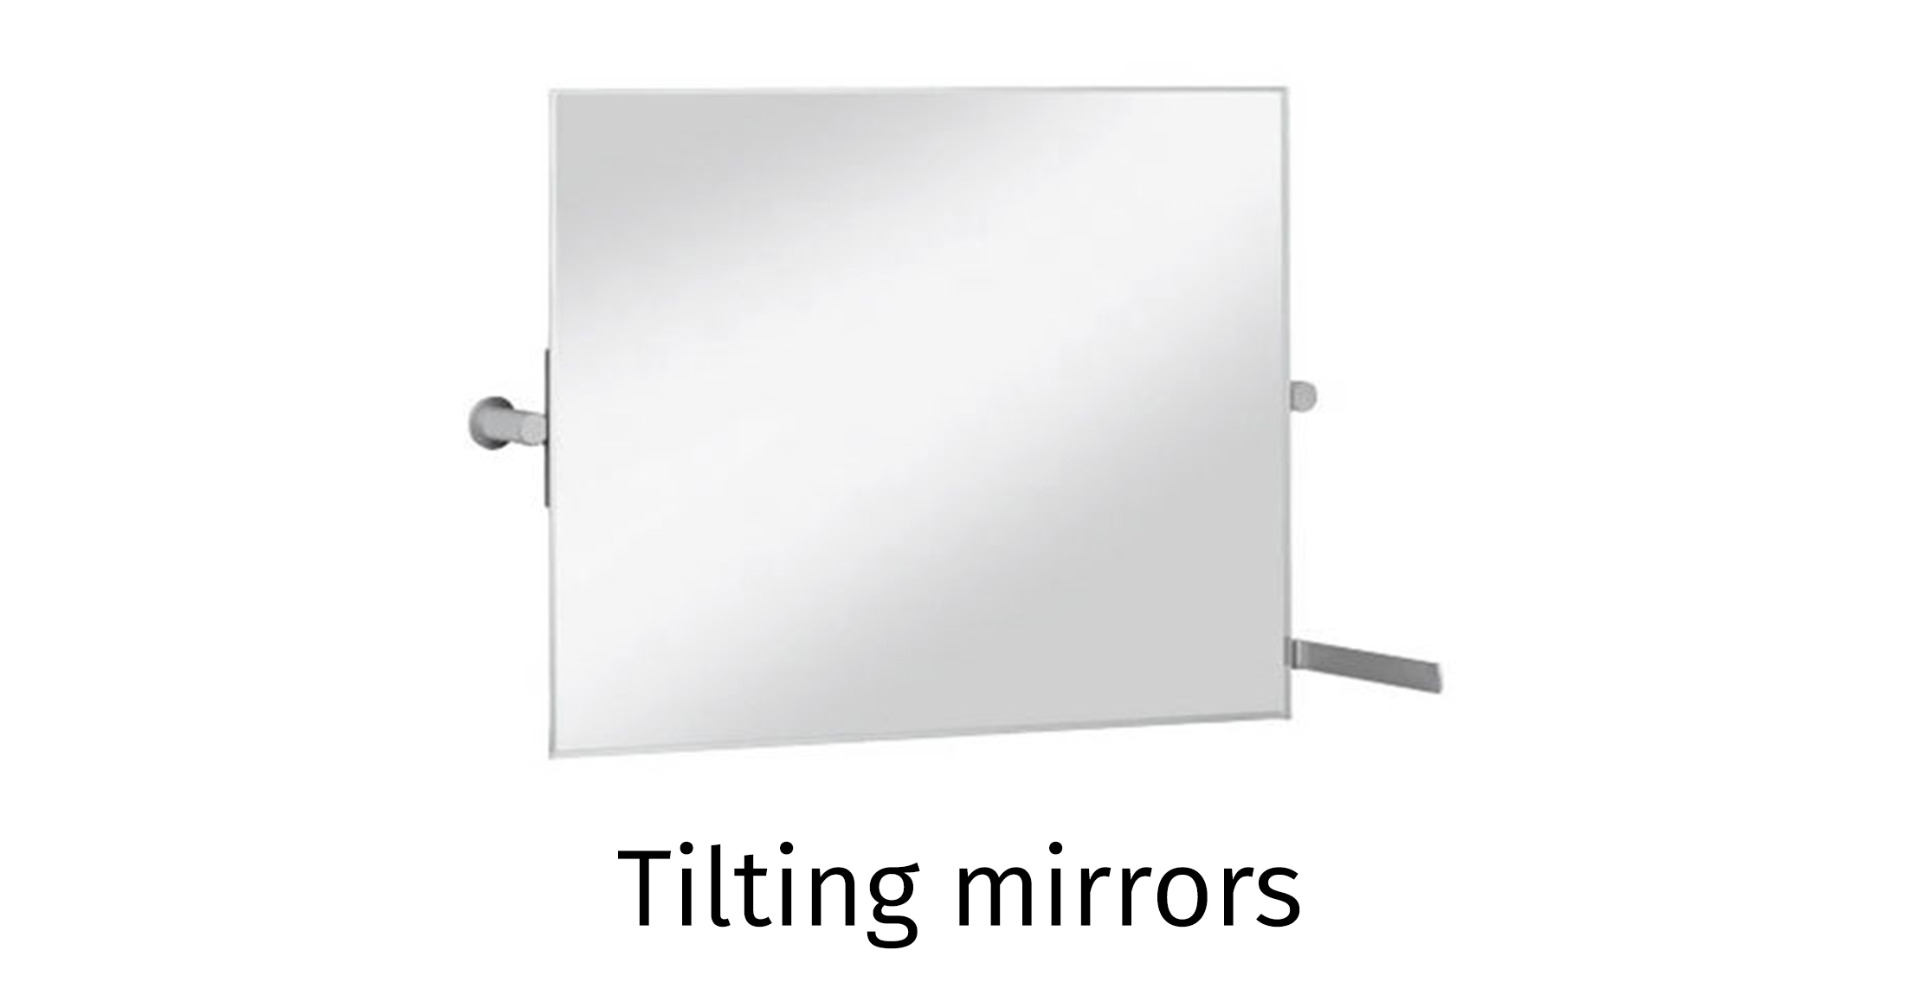 Tilting mirrors